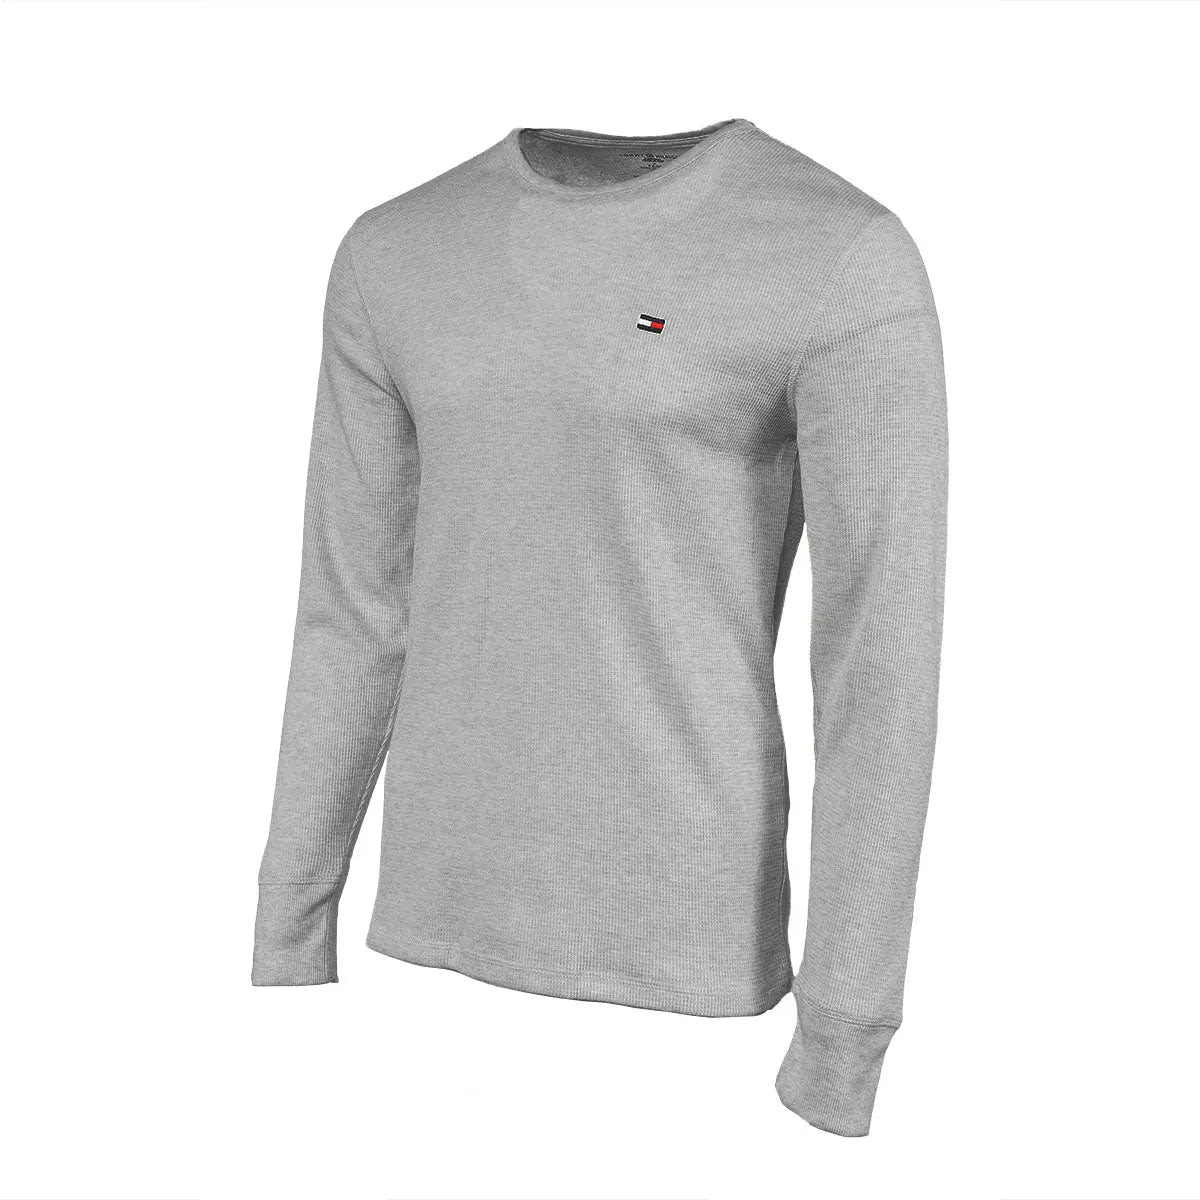 Tommy Hilfiger Men's Thermal Long Sleeve Shirt for $19.99 +FS!